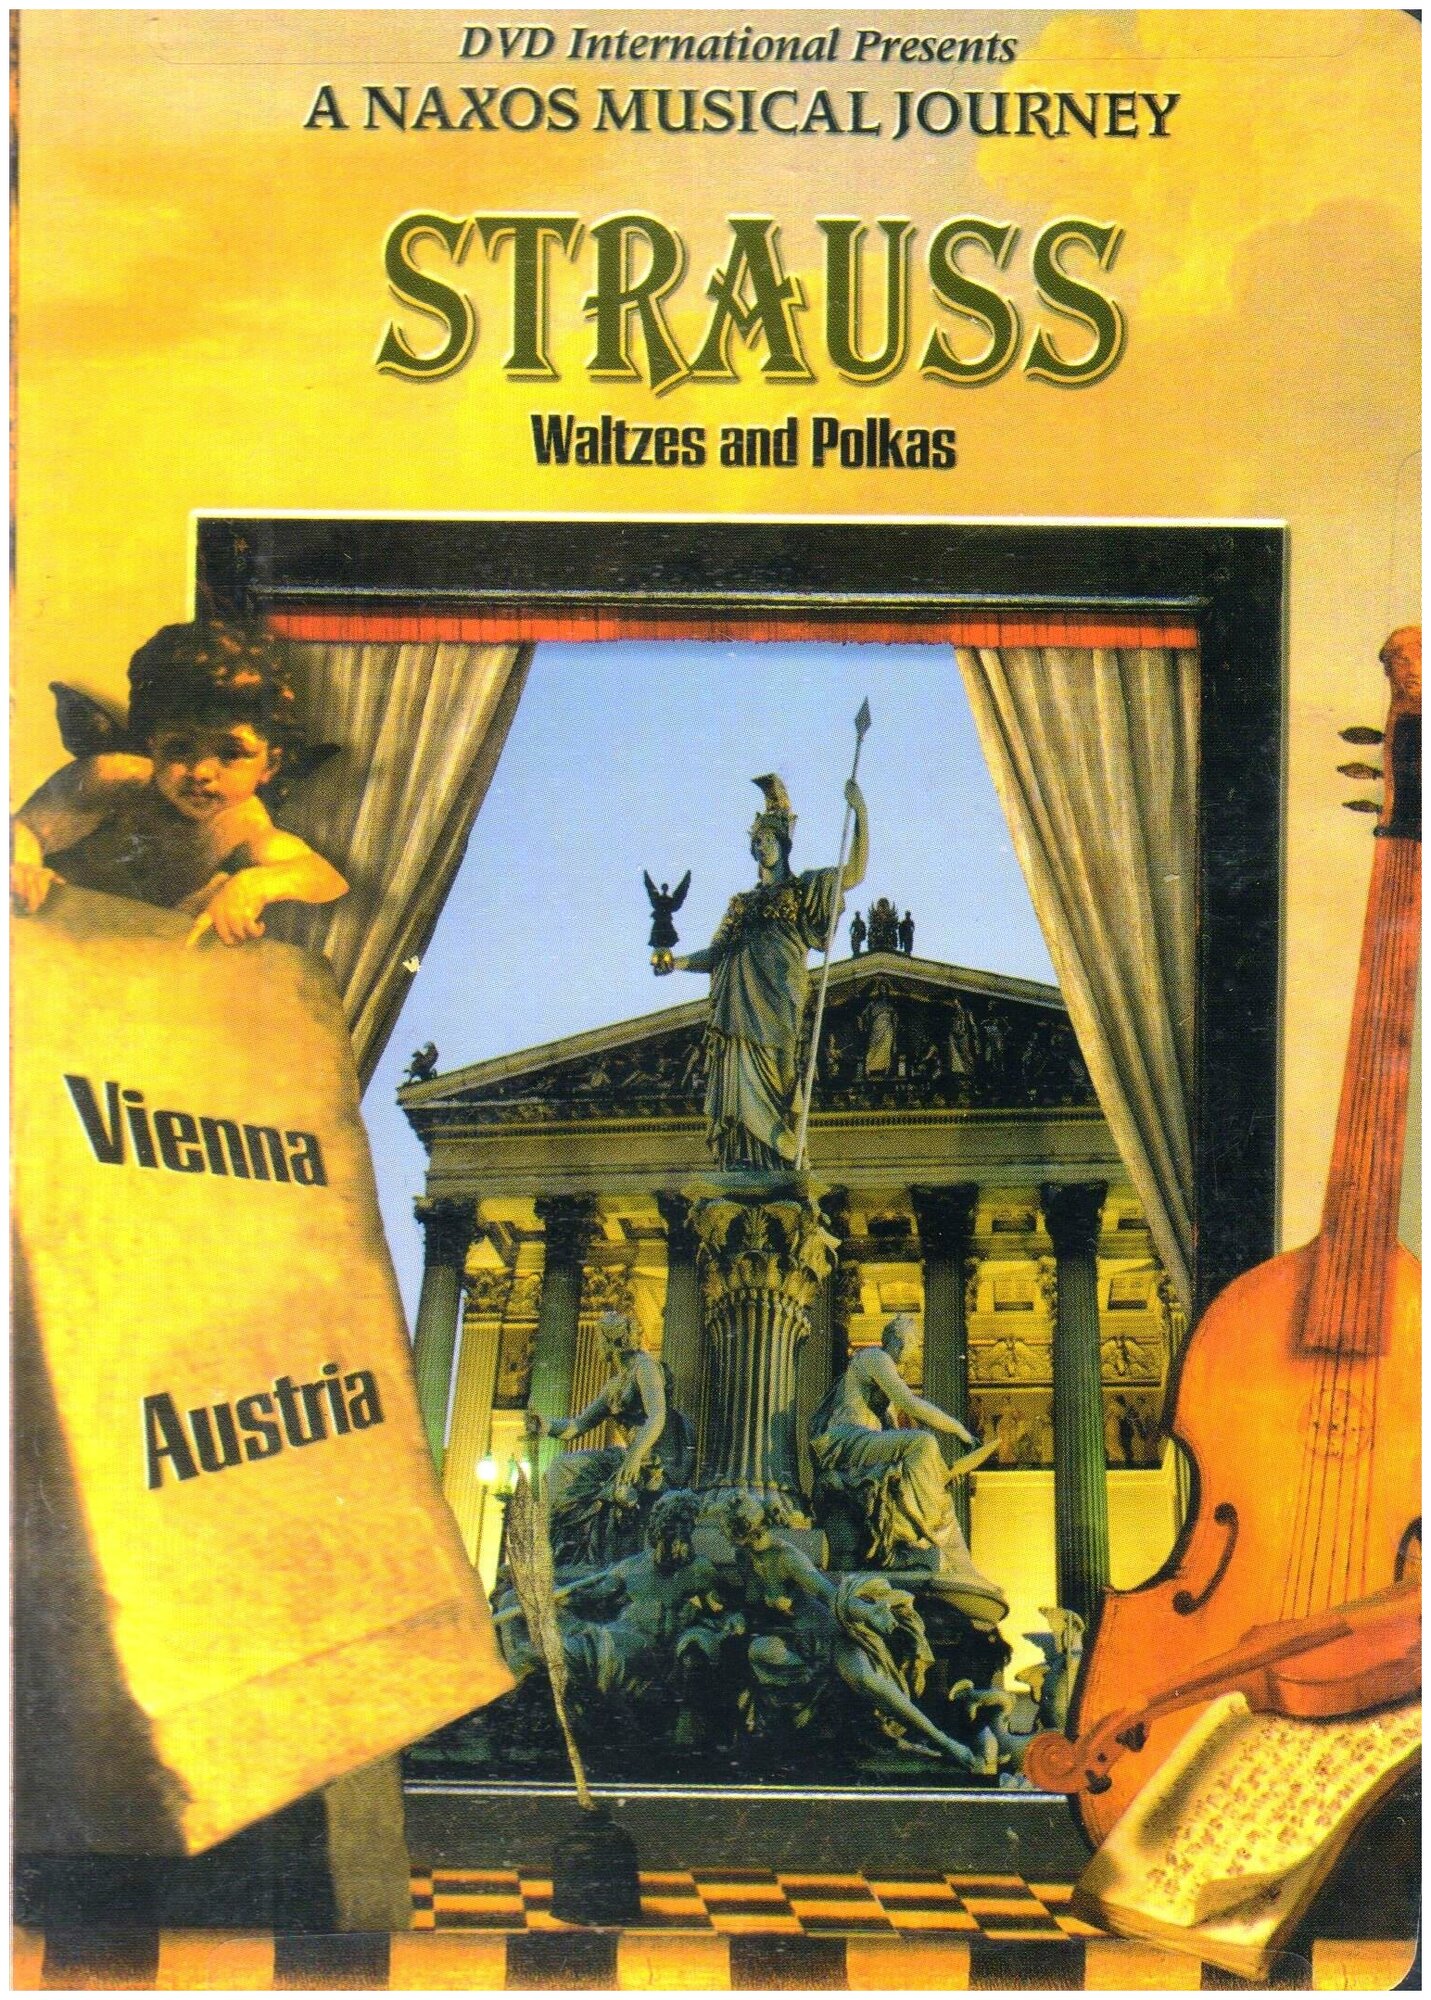 Strauss-Waltzes and Polkas-Musical Journey-Vienna Naxos DVD (ДВД Видео 1шт) No Region Coding